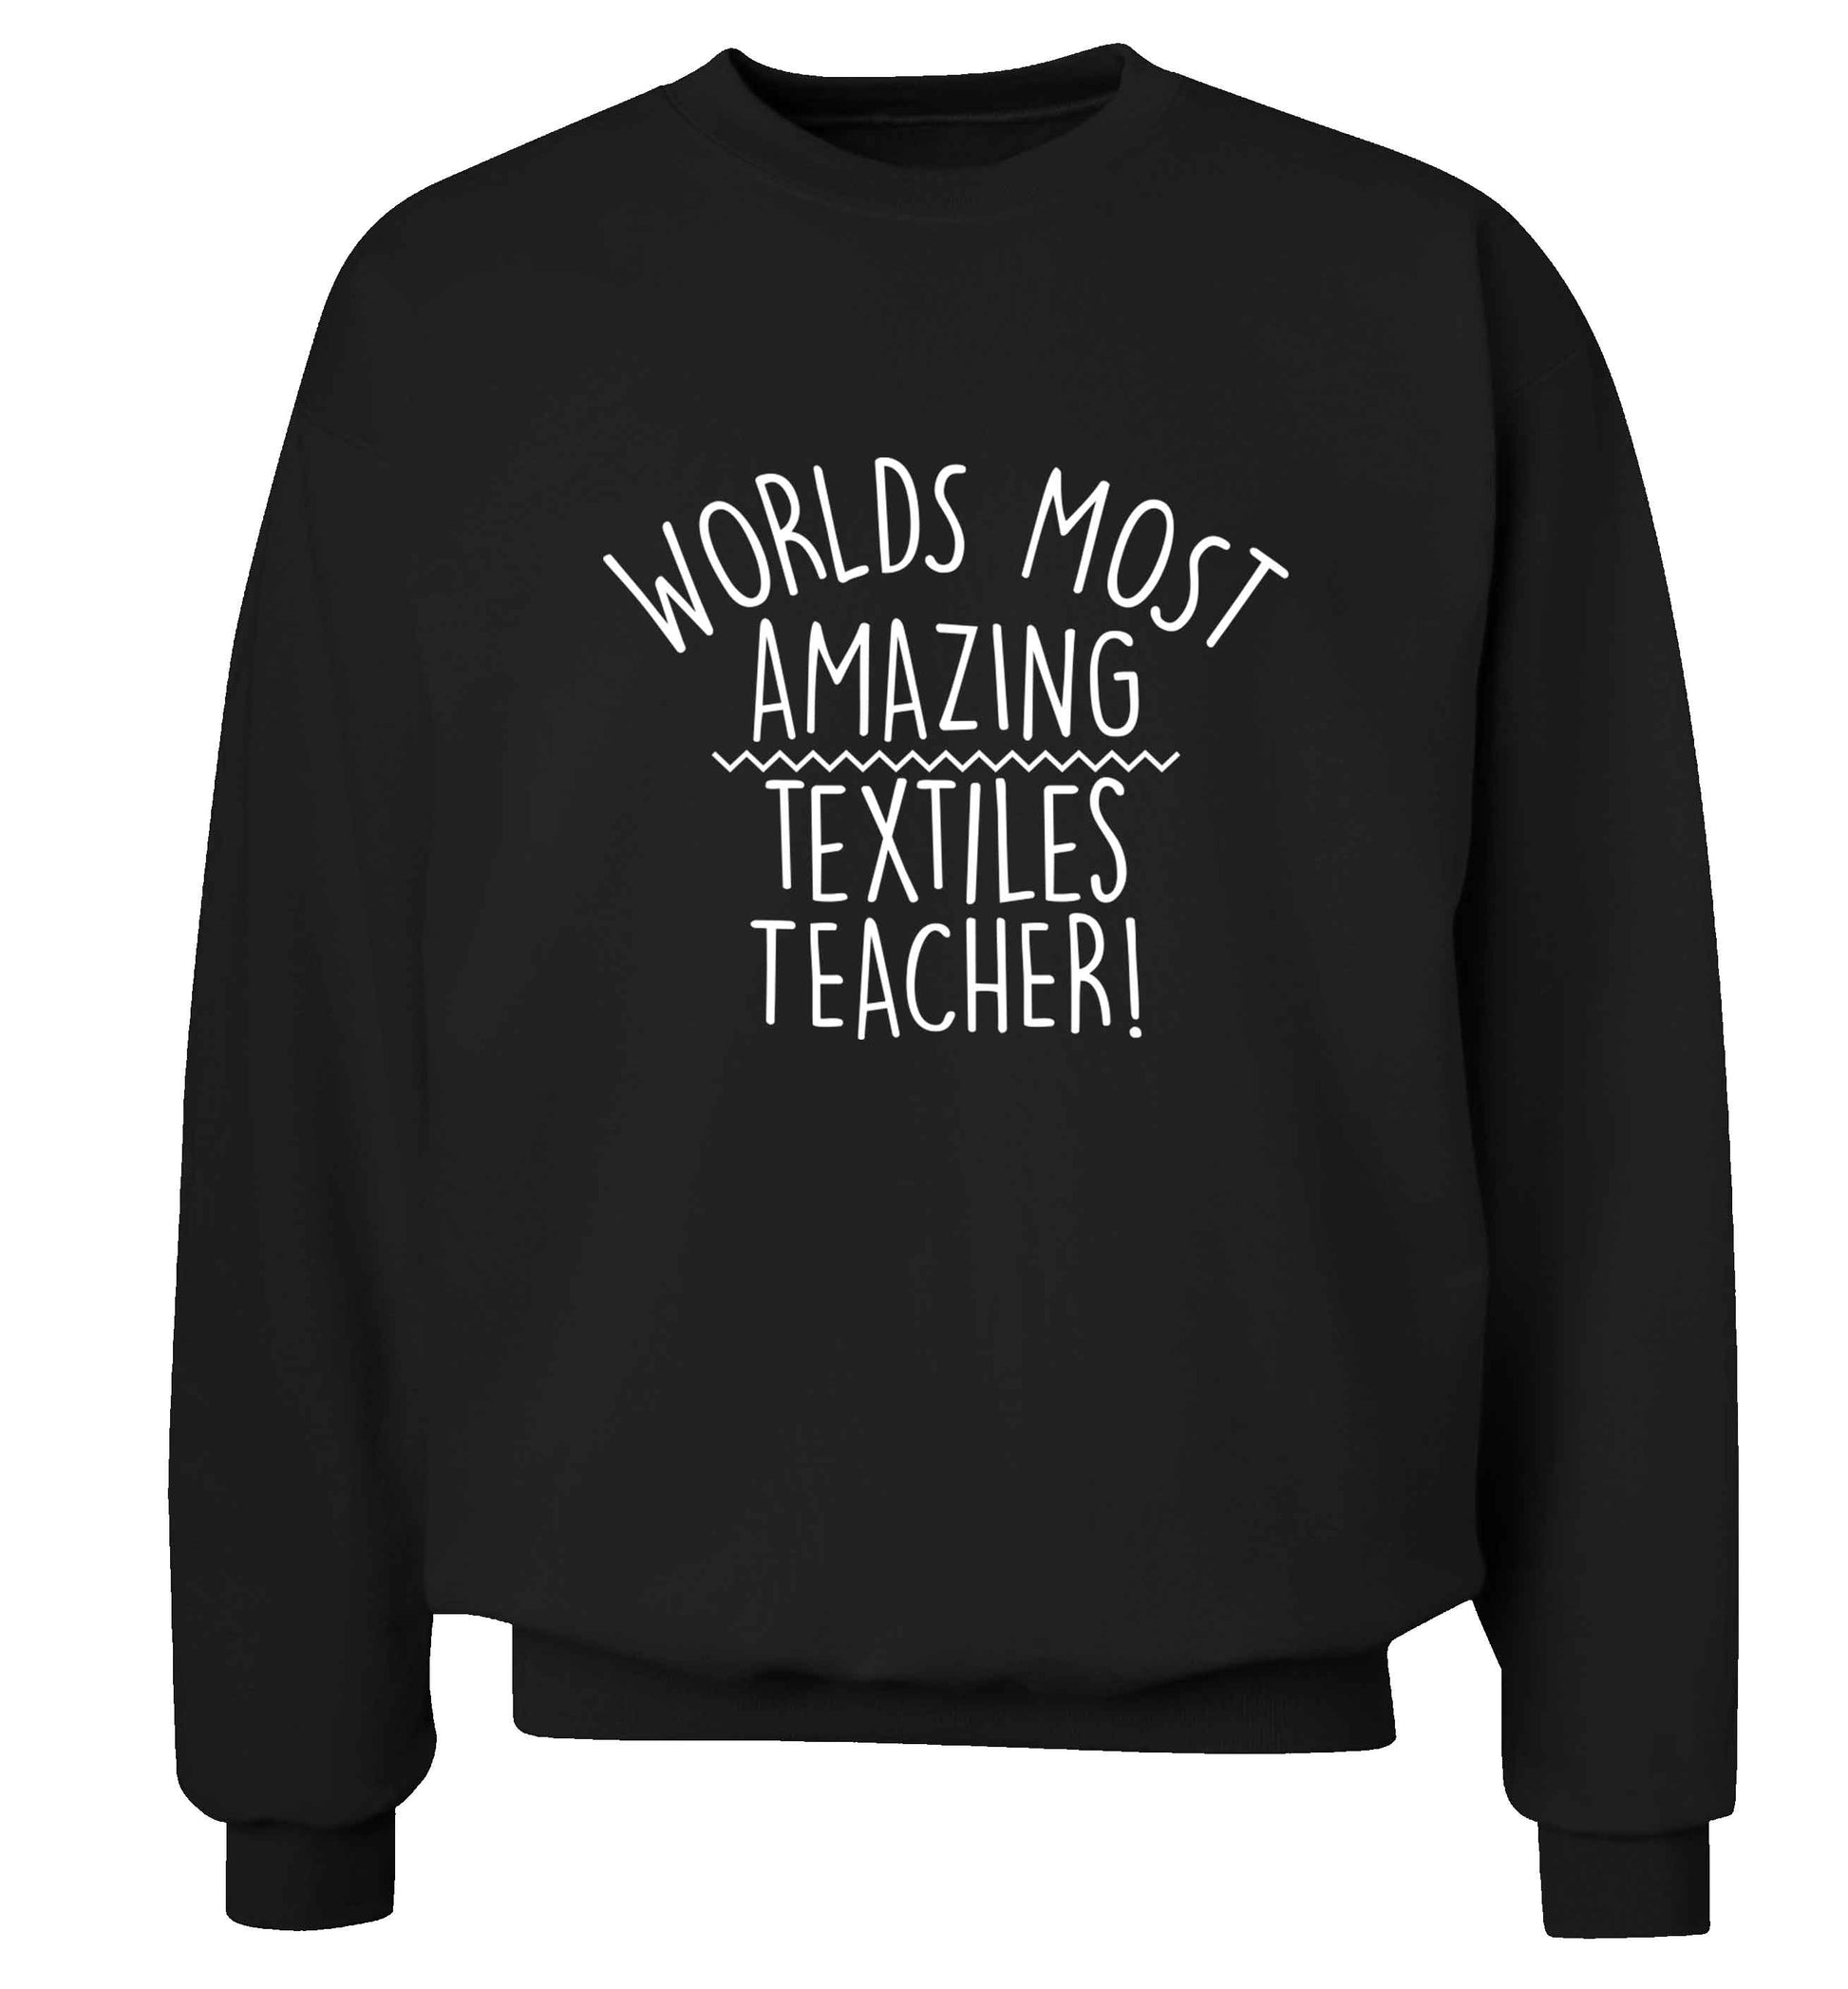 Worlds most amazing textiles teacher adult's unisex black sweater 2XL